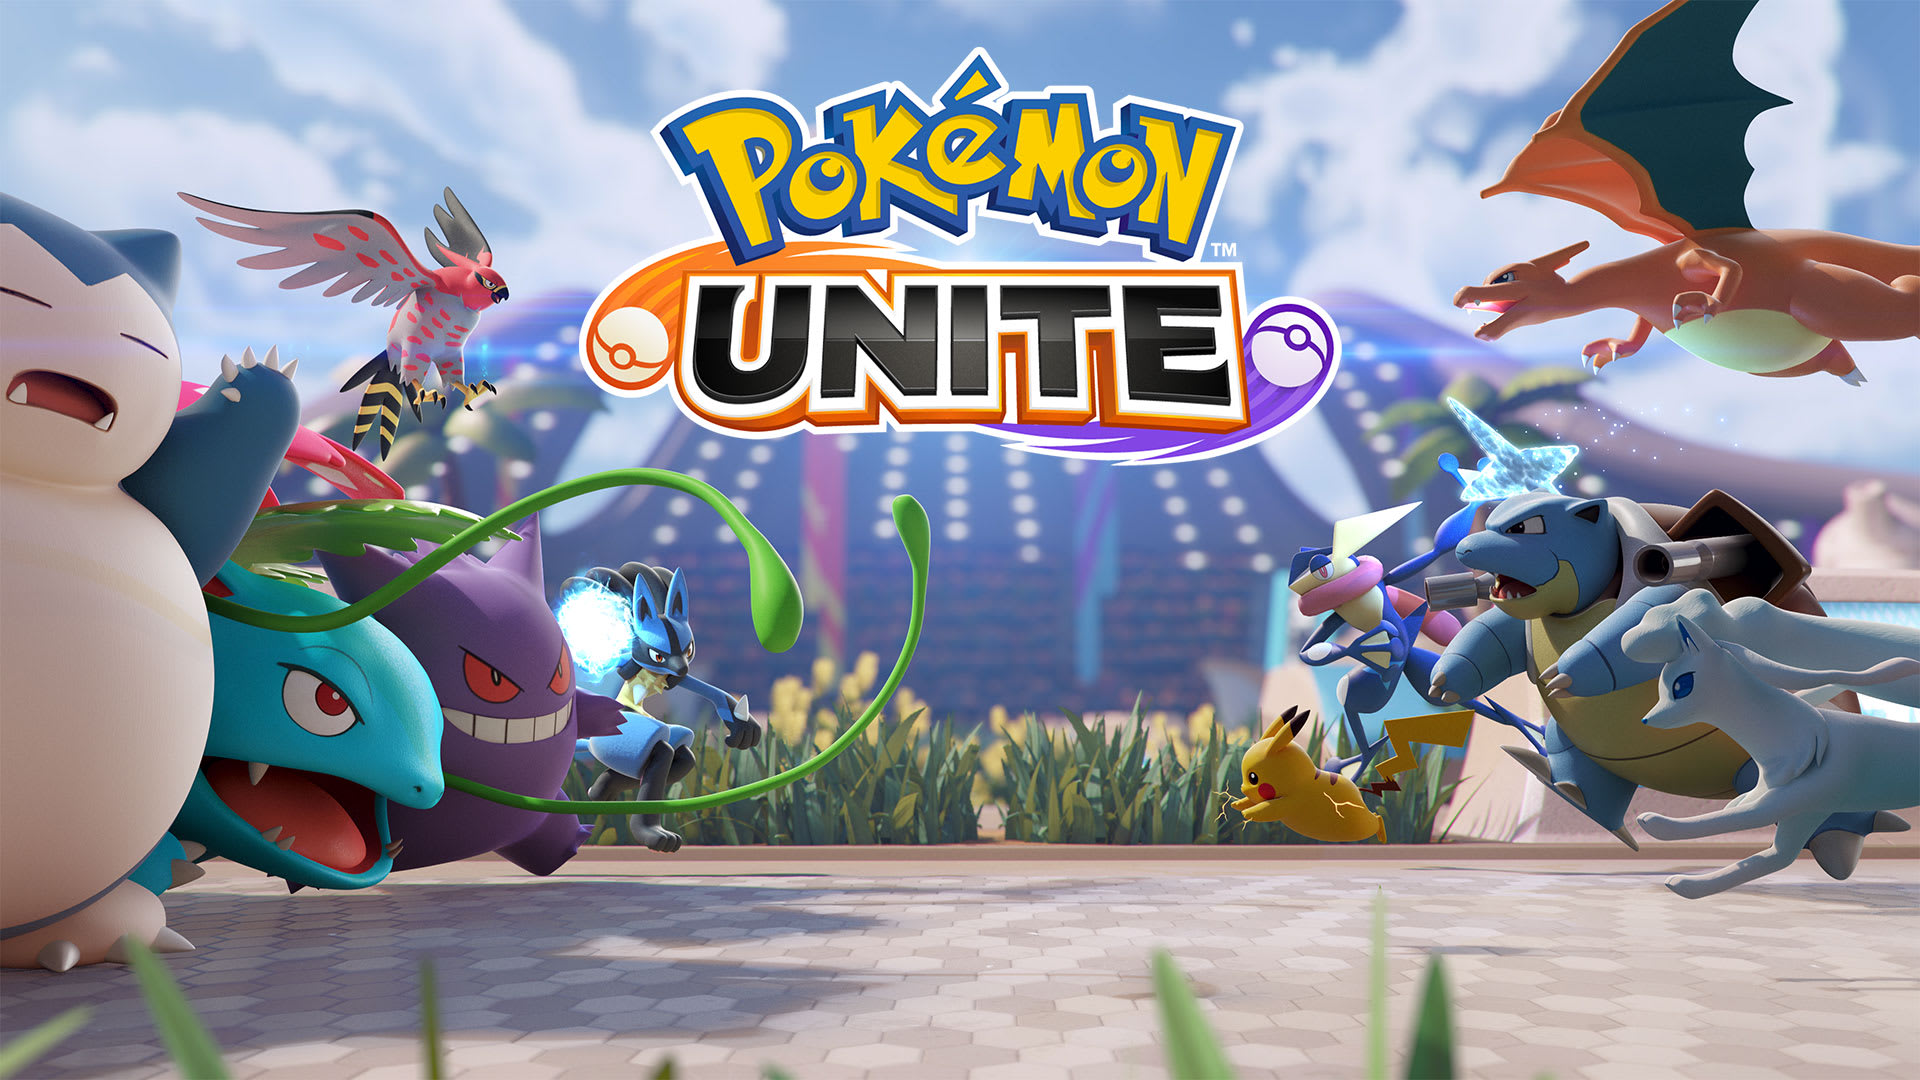 Pokemon UNITE is now on Nintendo Switch Nintendo Official Site